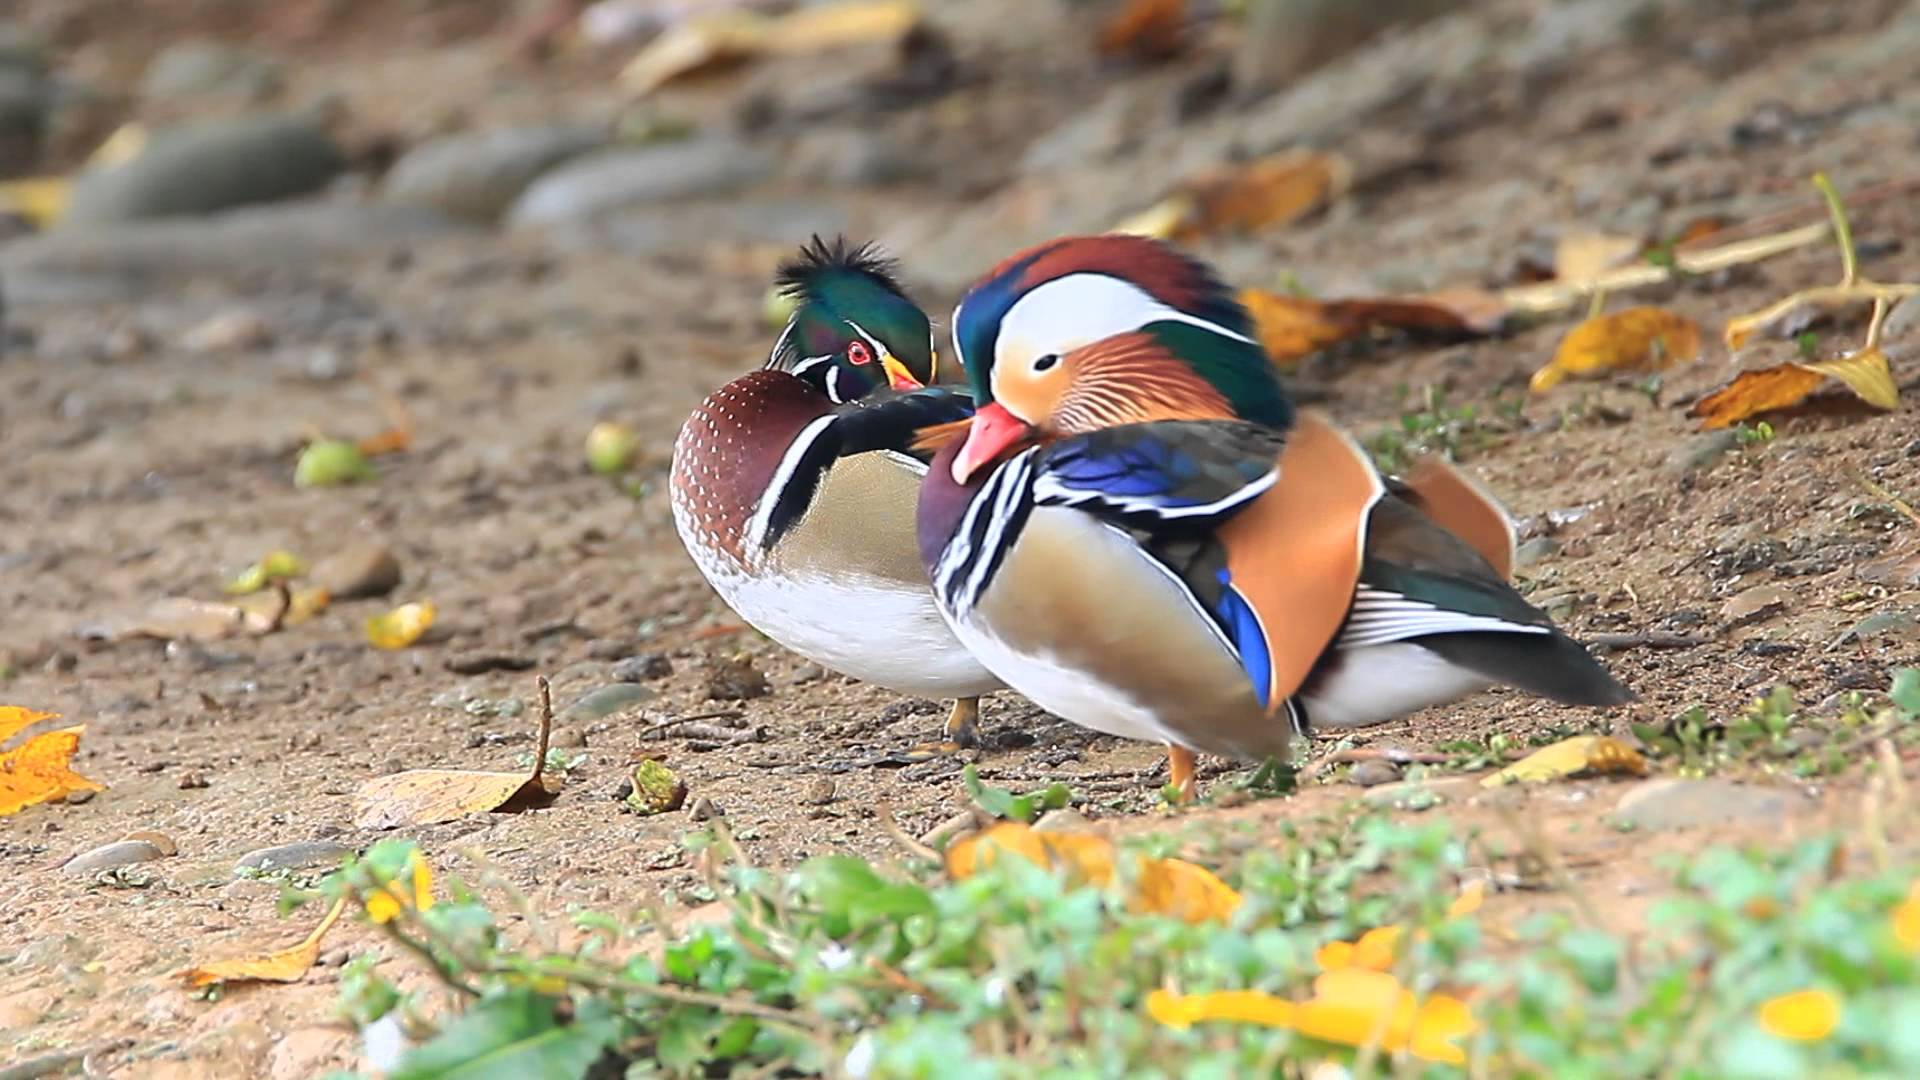 Mandarin duck vs. Wood duck 鴛鴦與美洲木鴨 - YouTube